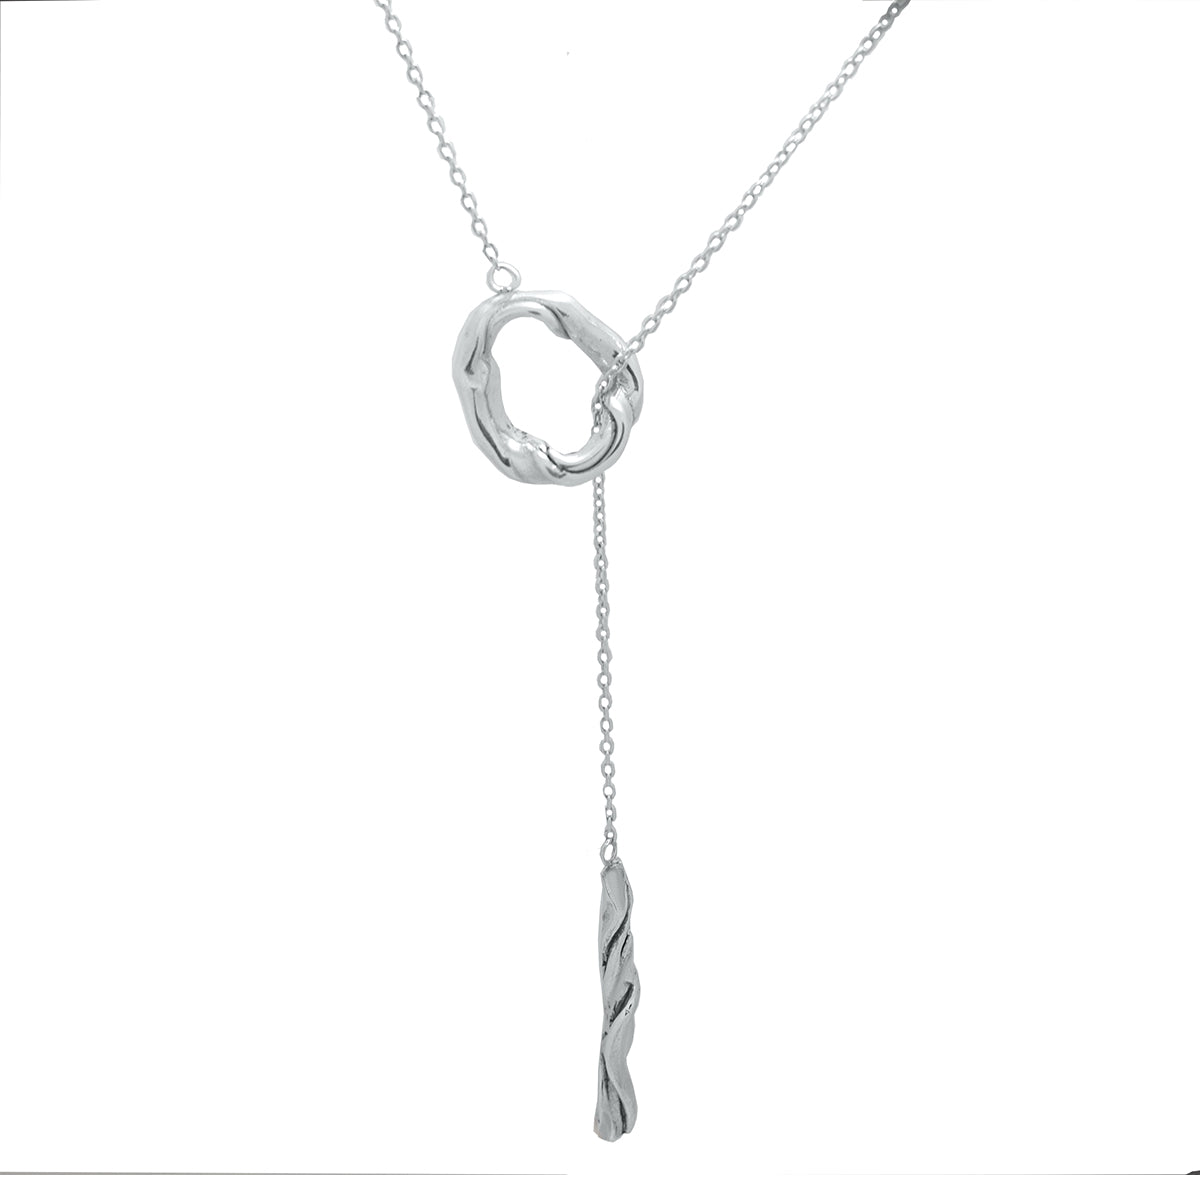 Necklace Jewelry Gold Silver Organic Handcrafted Handmade Fashion Design Custom Bespoke 